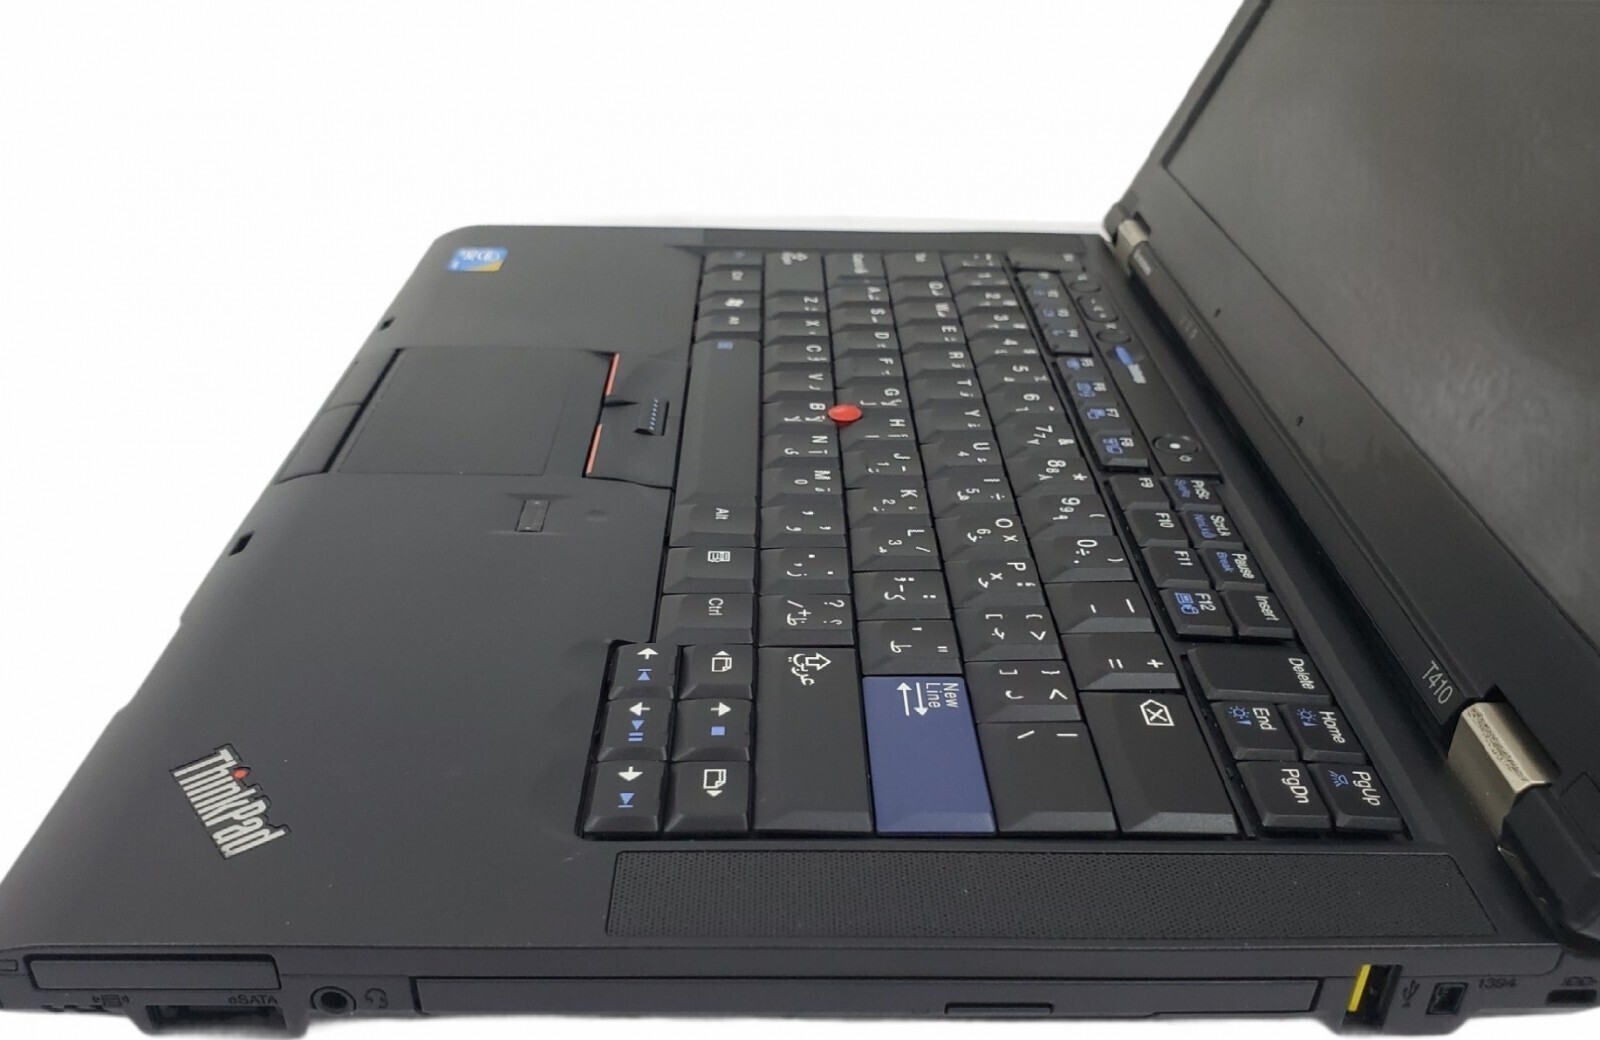 Lenovo ThinkPad T410 Intel i5 520M 2.40Ghz 4GB RAM 160GB HDD 14.1" Win 10 - B Grade Image 1